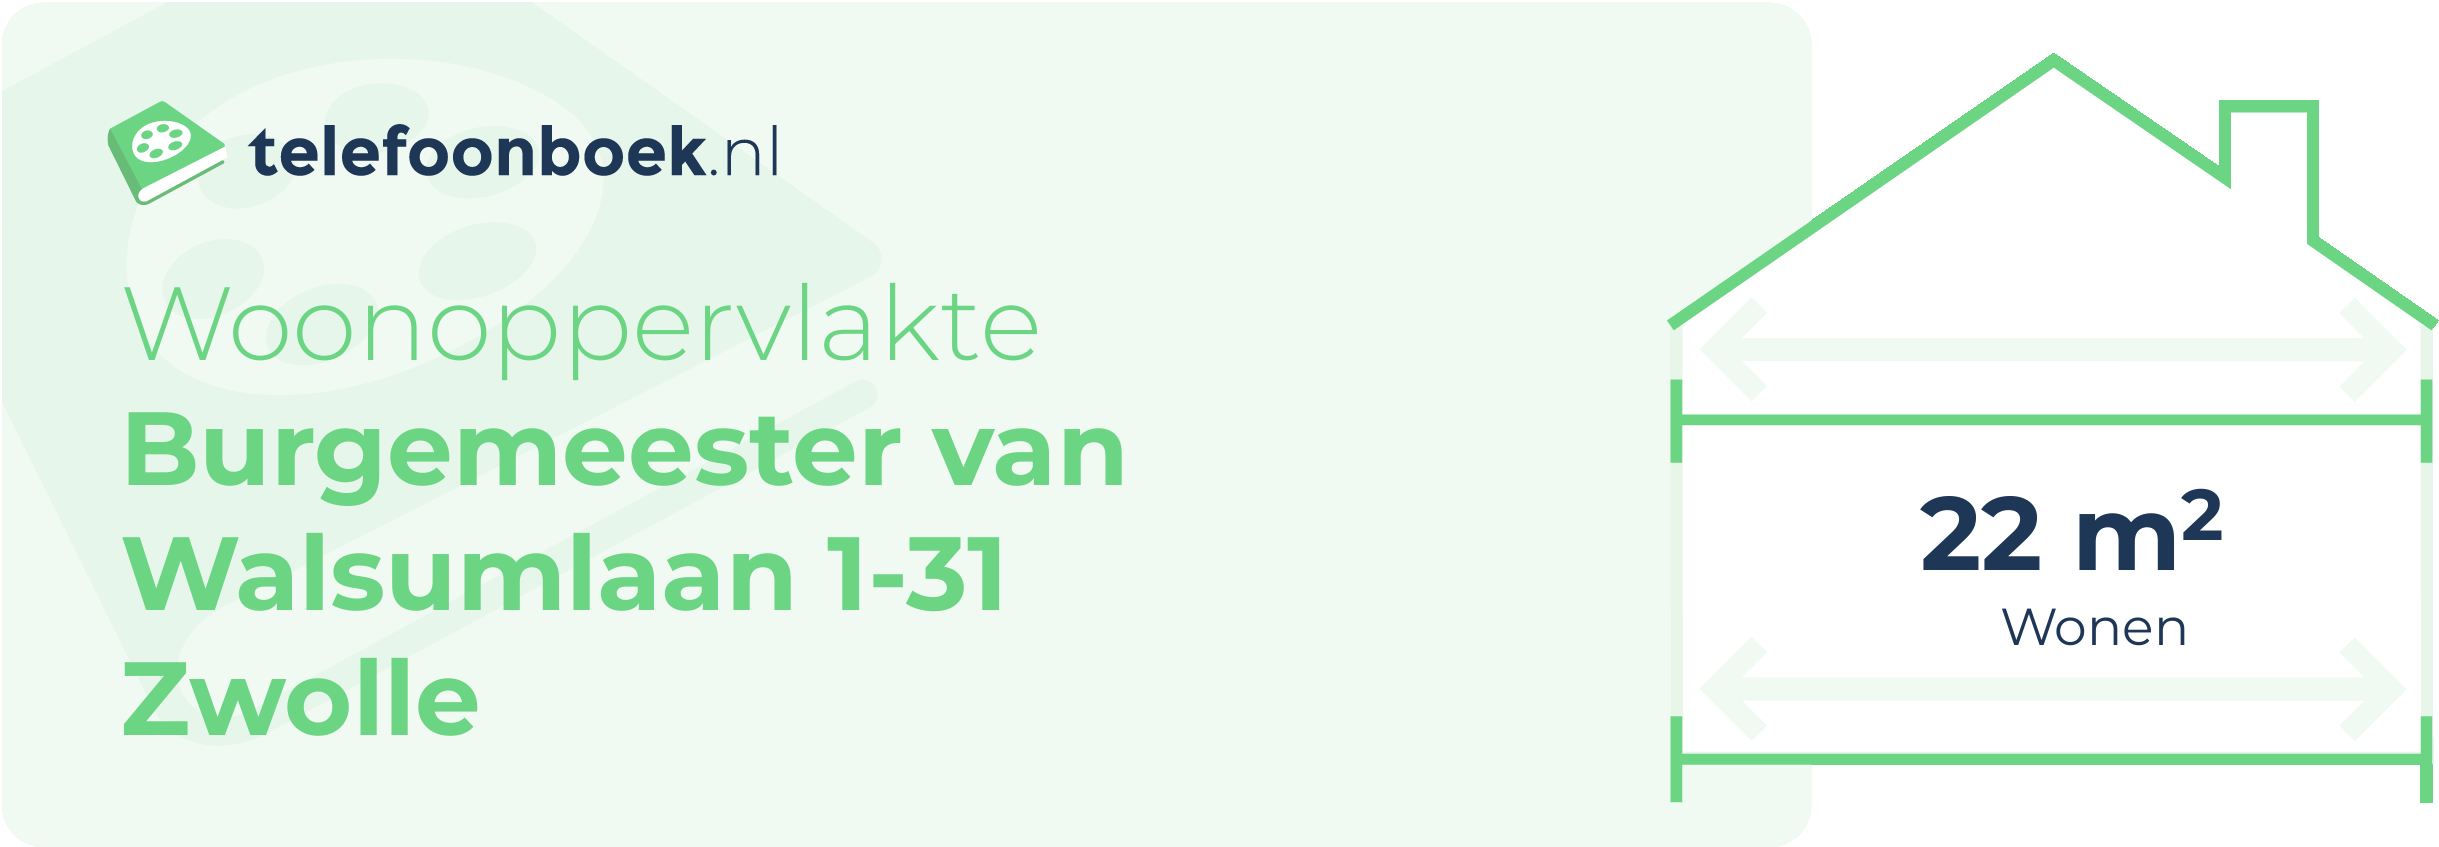 Woonoppervlakte Burgemeester Van Walsumlaan 1-31 Zwolle